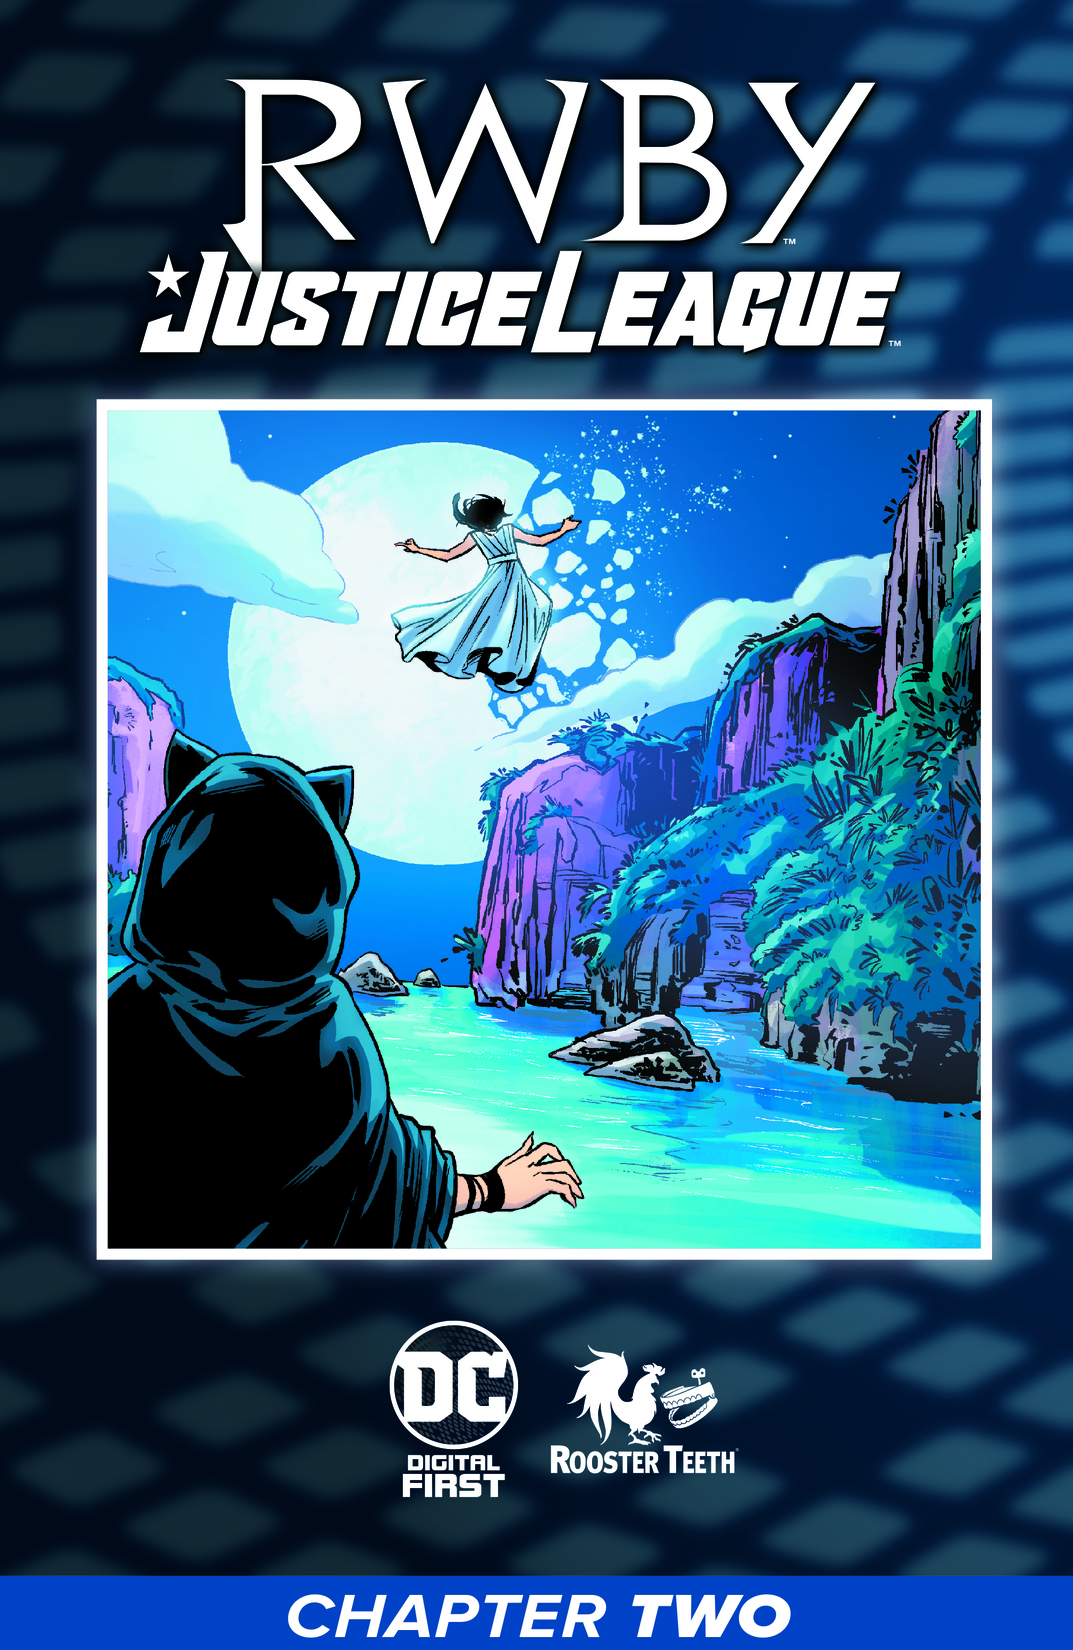 RWBY/Justice League #2 preview images